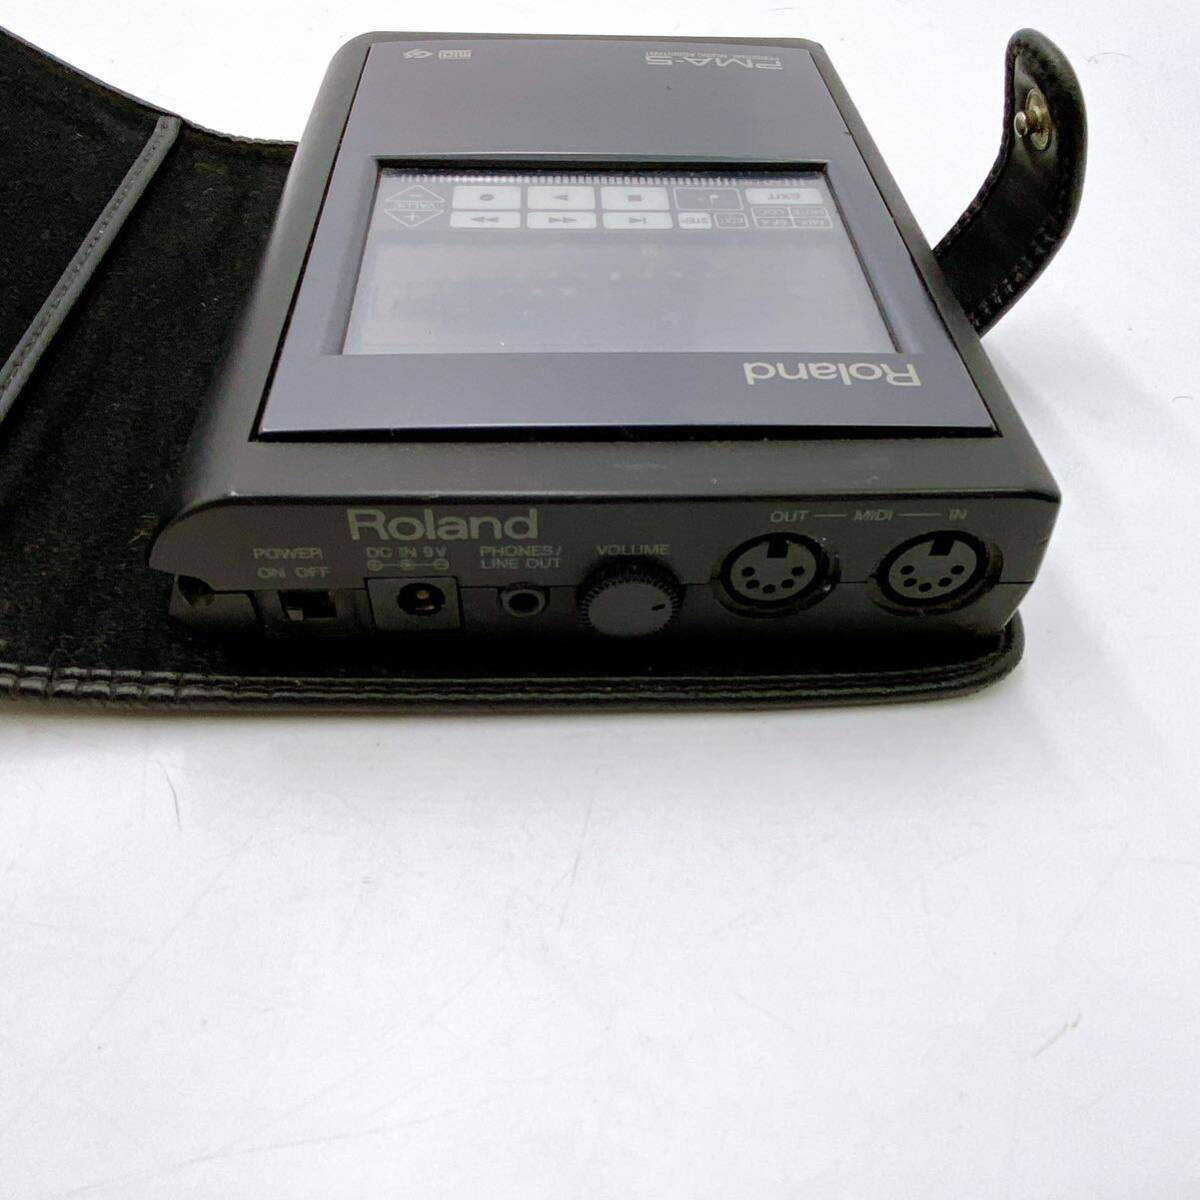  Roland PMA-5 портативный секвенсор Roland PERSONAL MUSIC ASSISTANT Junk 